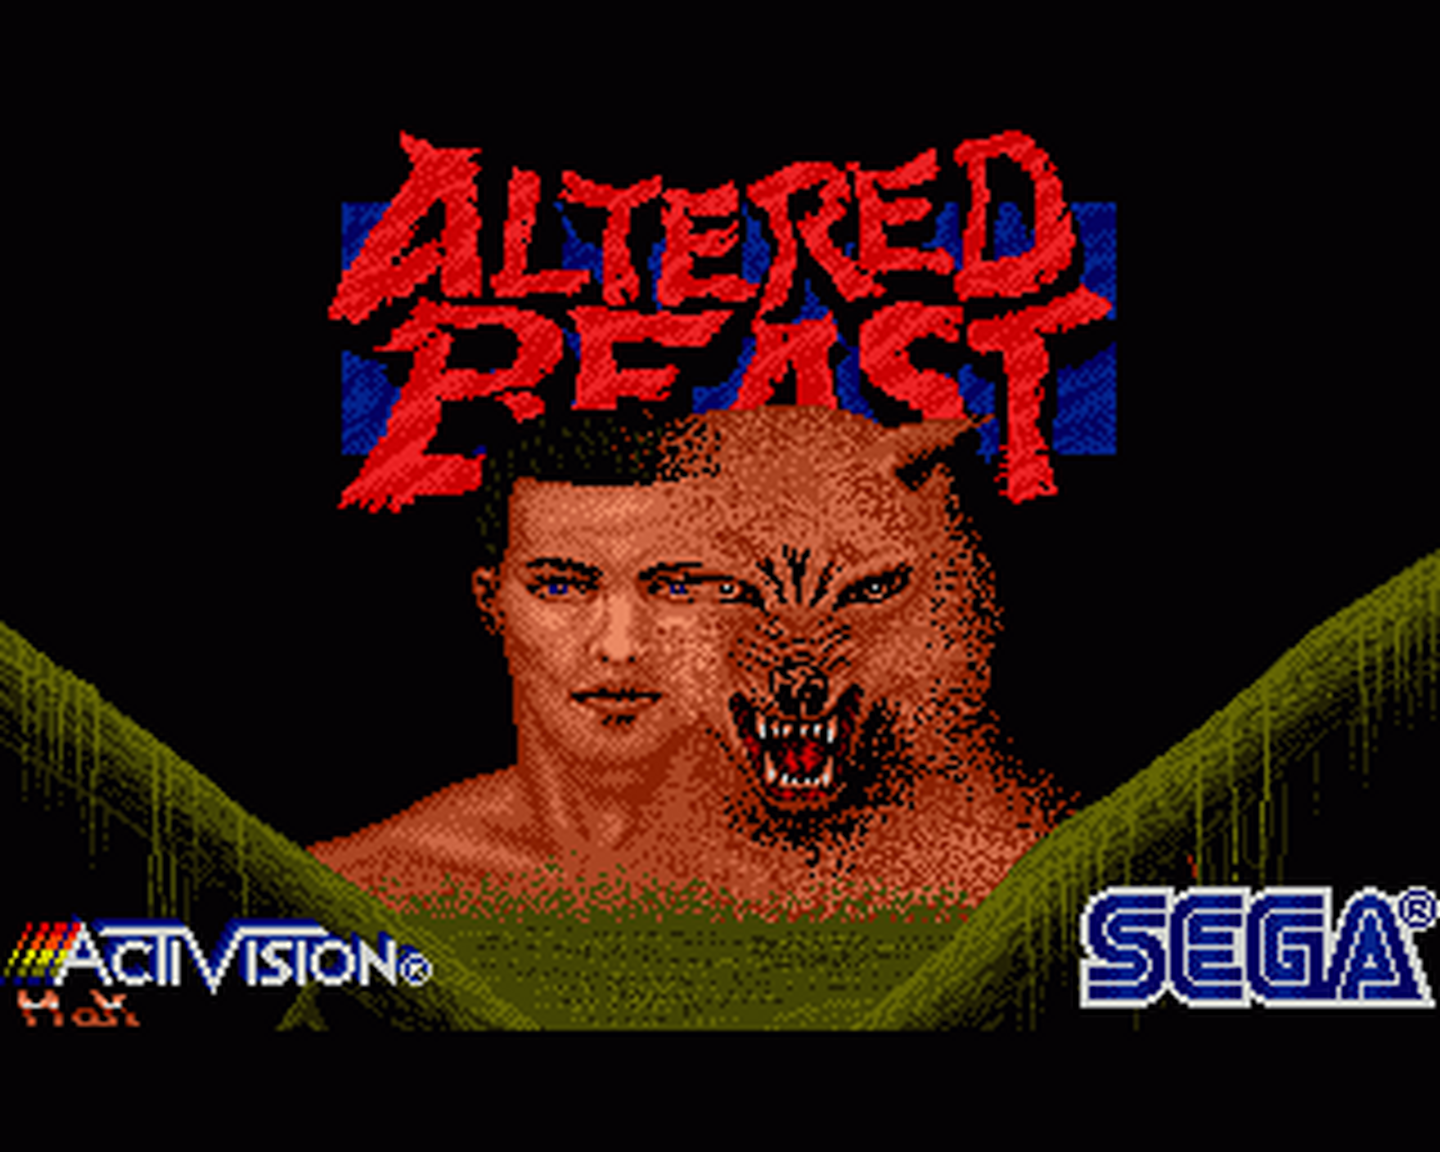 Amiga GameBase Altered_Beast Activision 1989